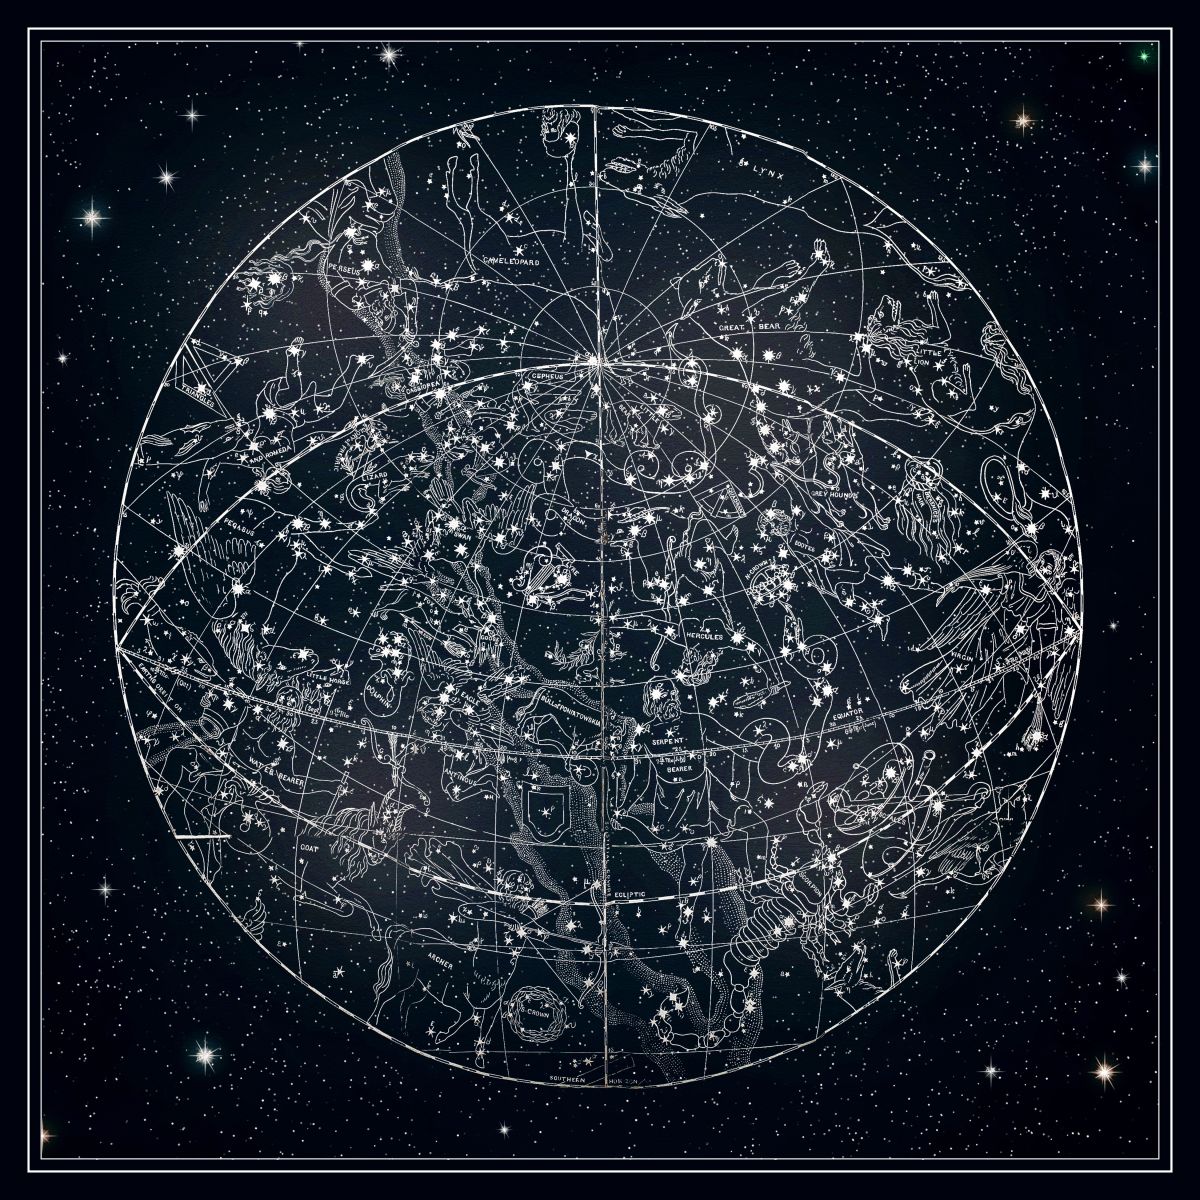 Constellation Map